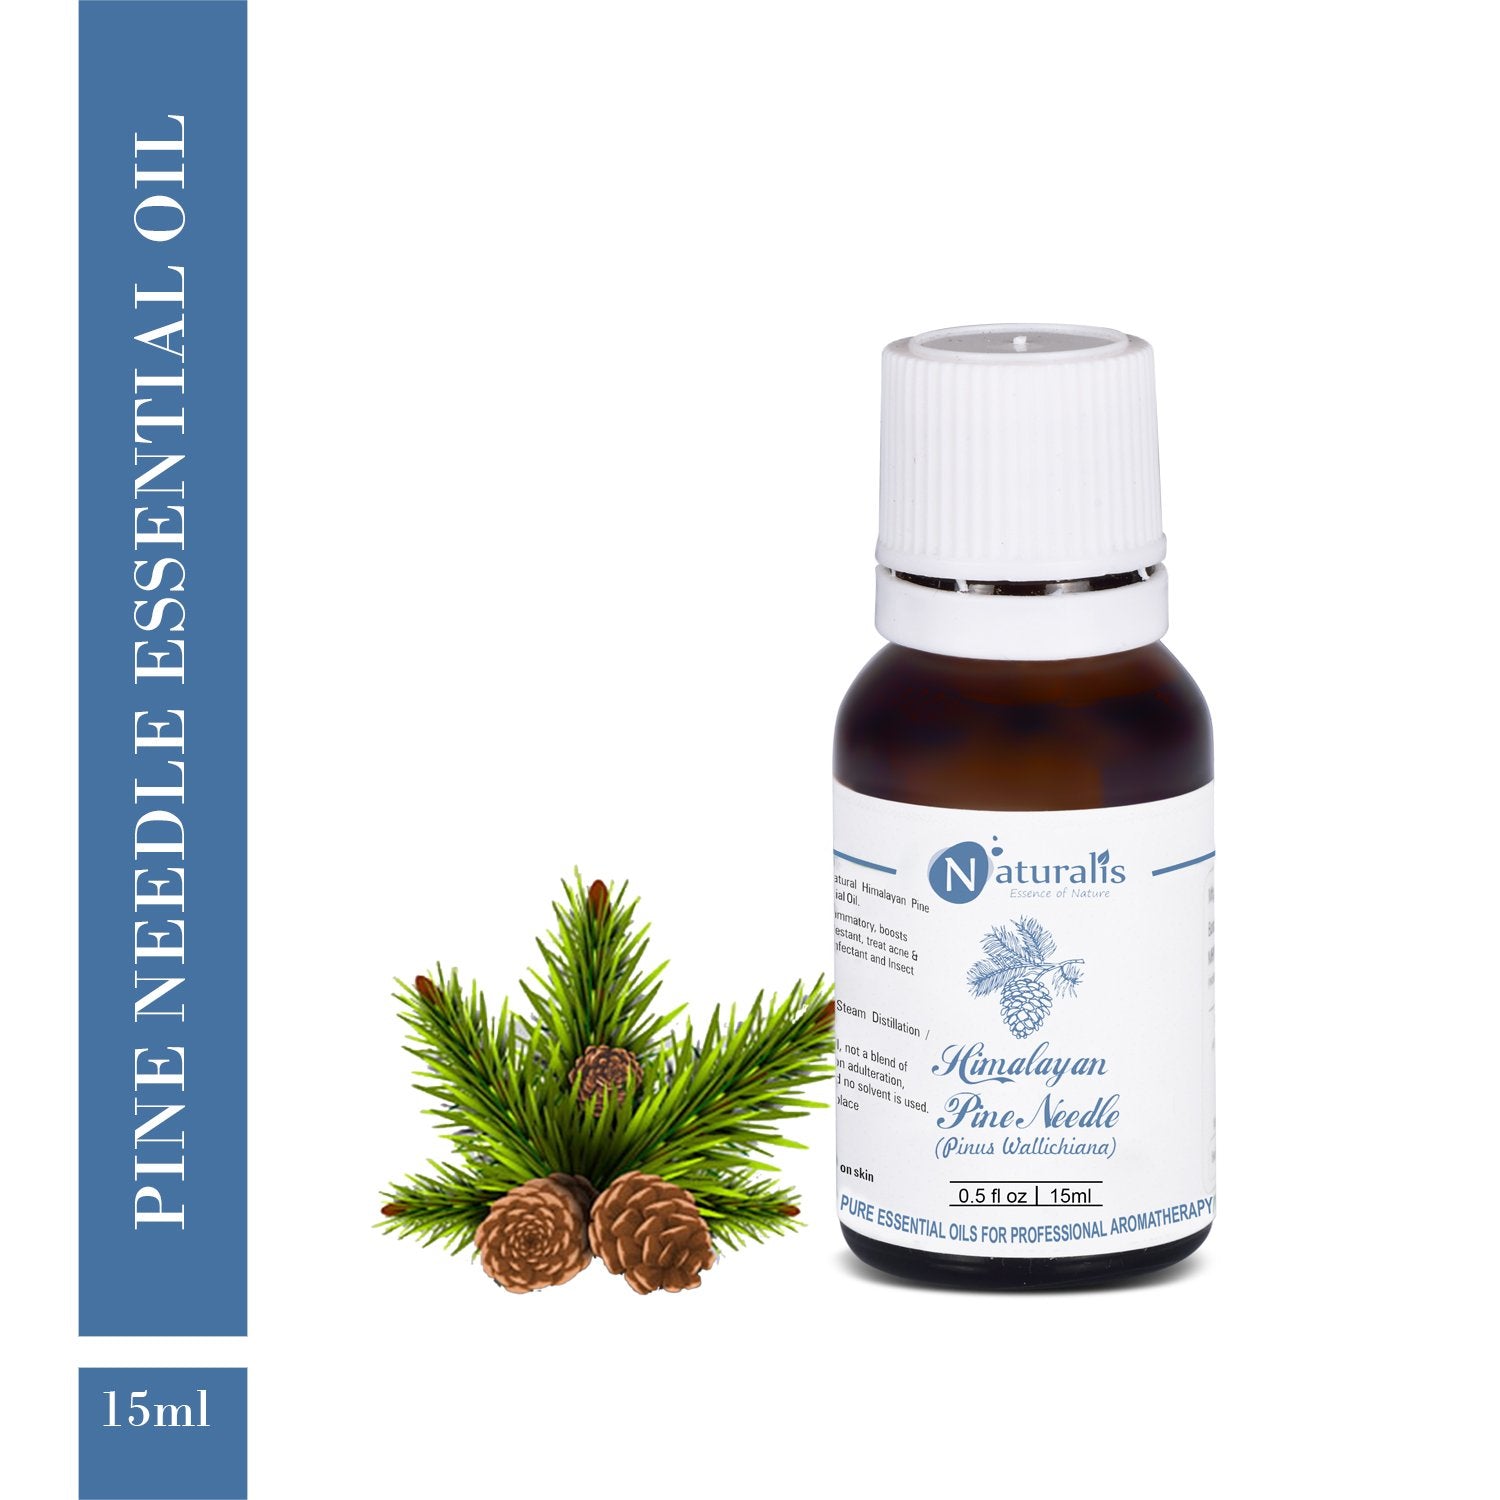 Himalayan Pine Needle Needle Essential Oil by Naturalis - Pure & Natural - Naturalis